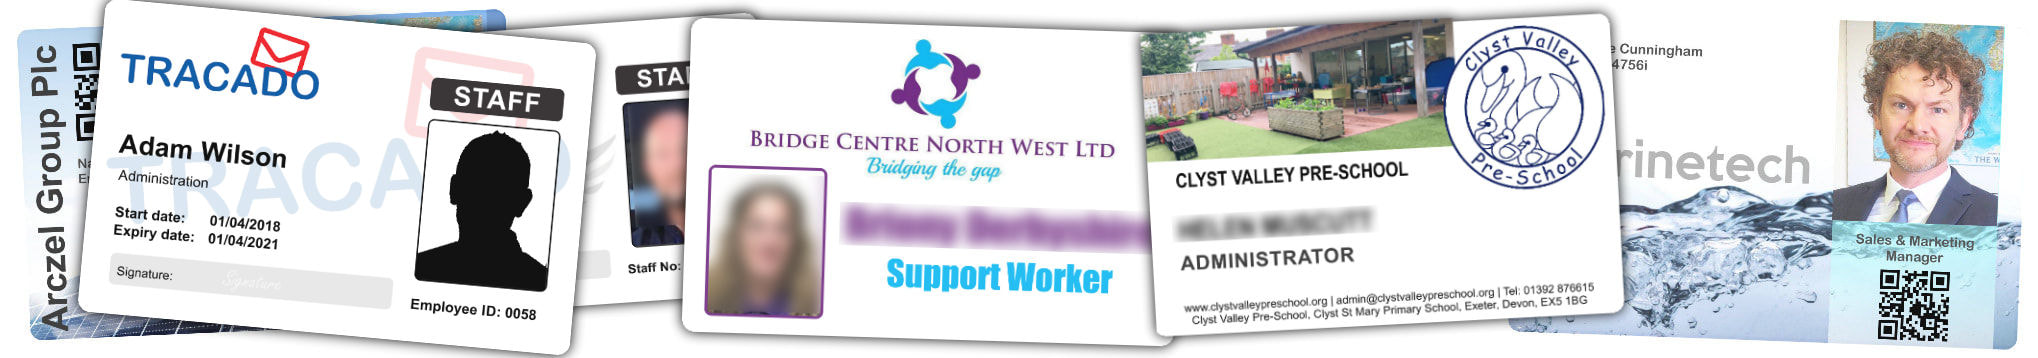 Gloucester ID card printing | staff photo ID cards | company employee ID card print service | Local Identity Card Printing | Custom Design 